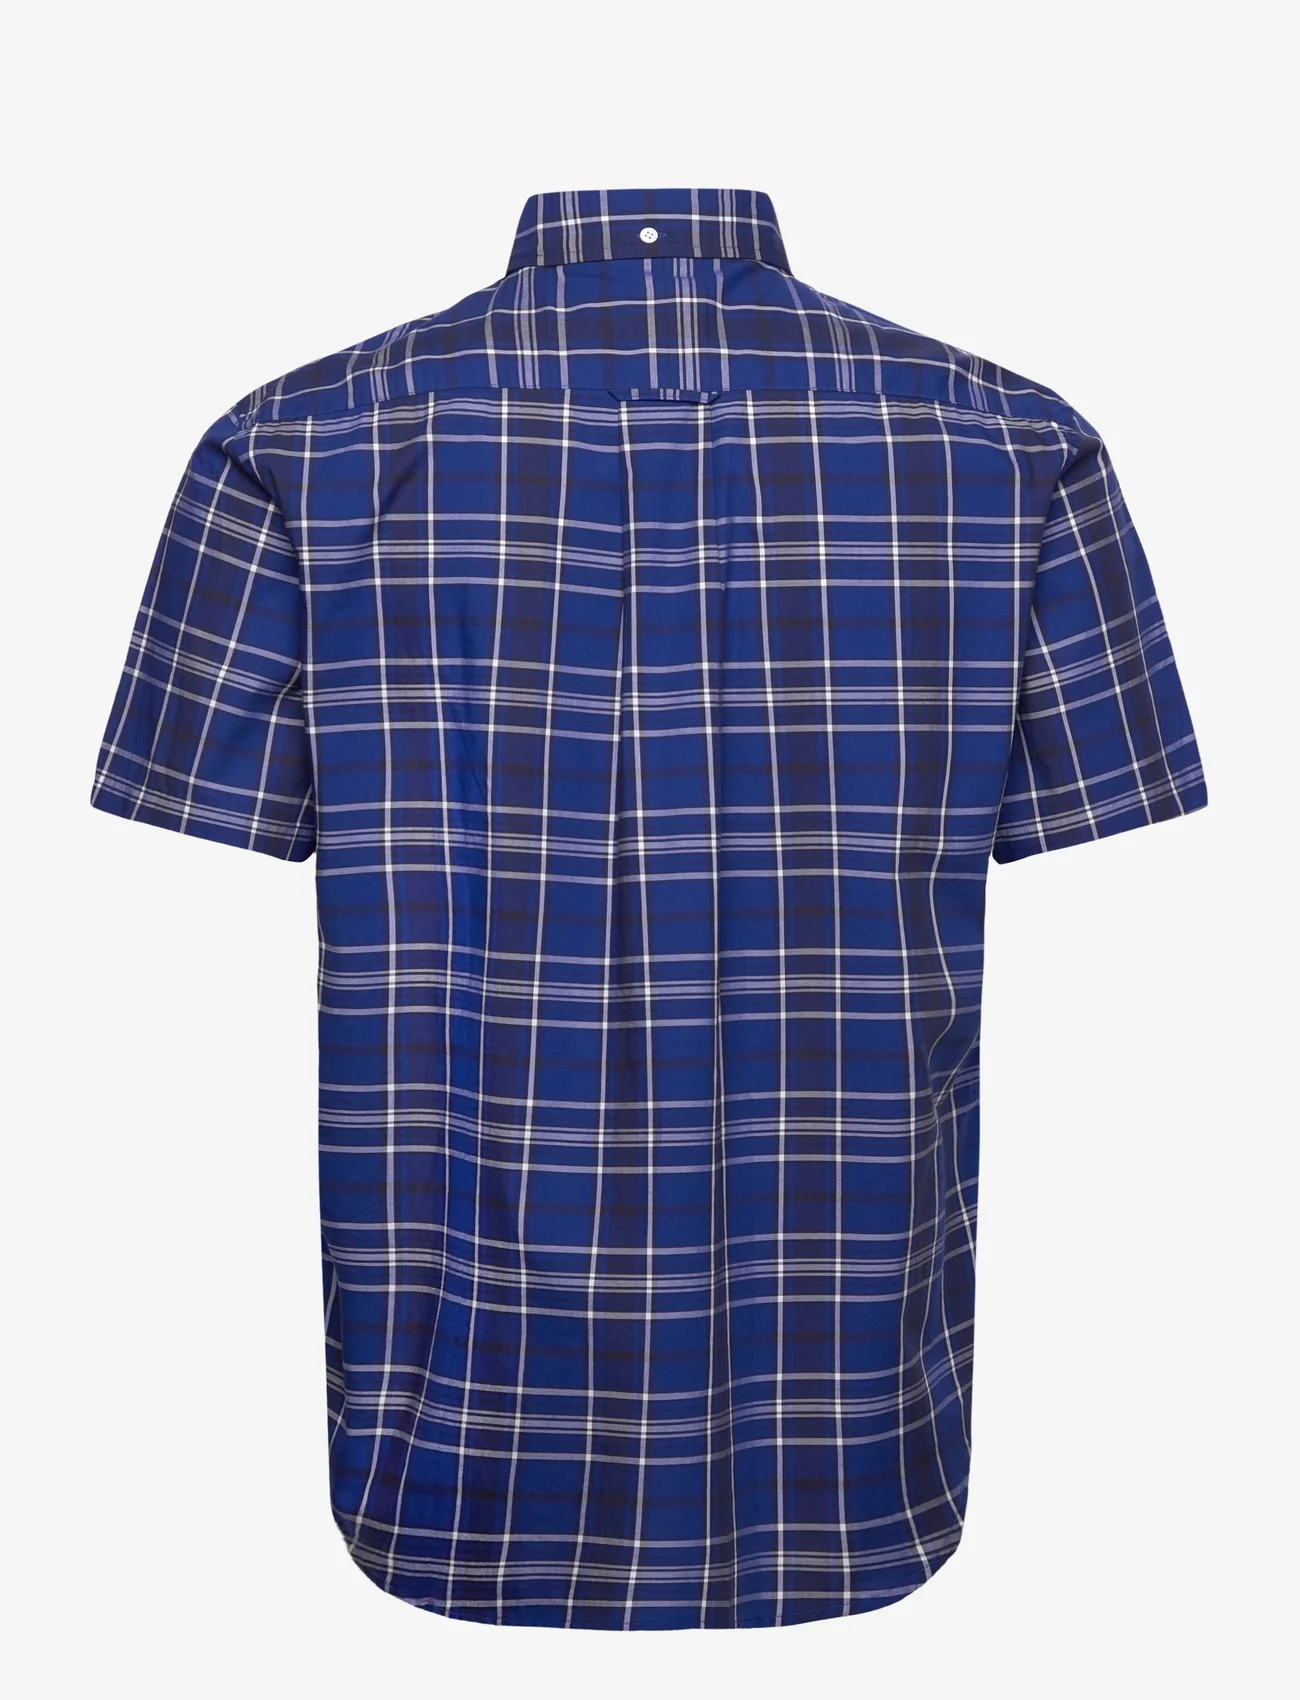 GANT - REG UT POPLIN CHECK SS BD - checkered shirts - college blue - 1